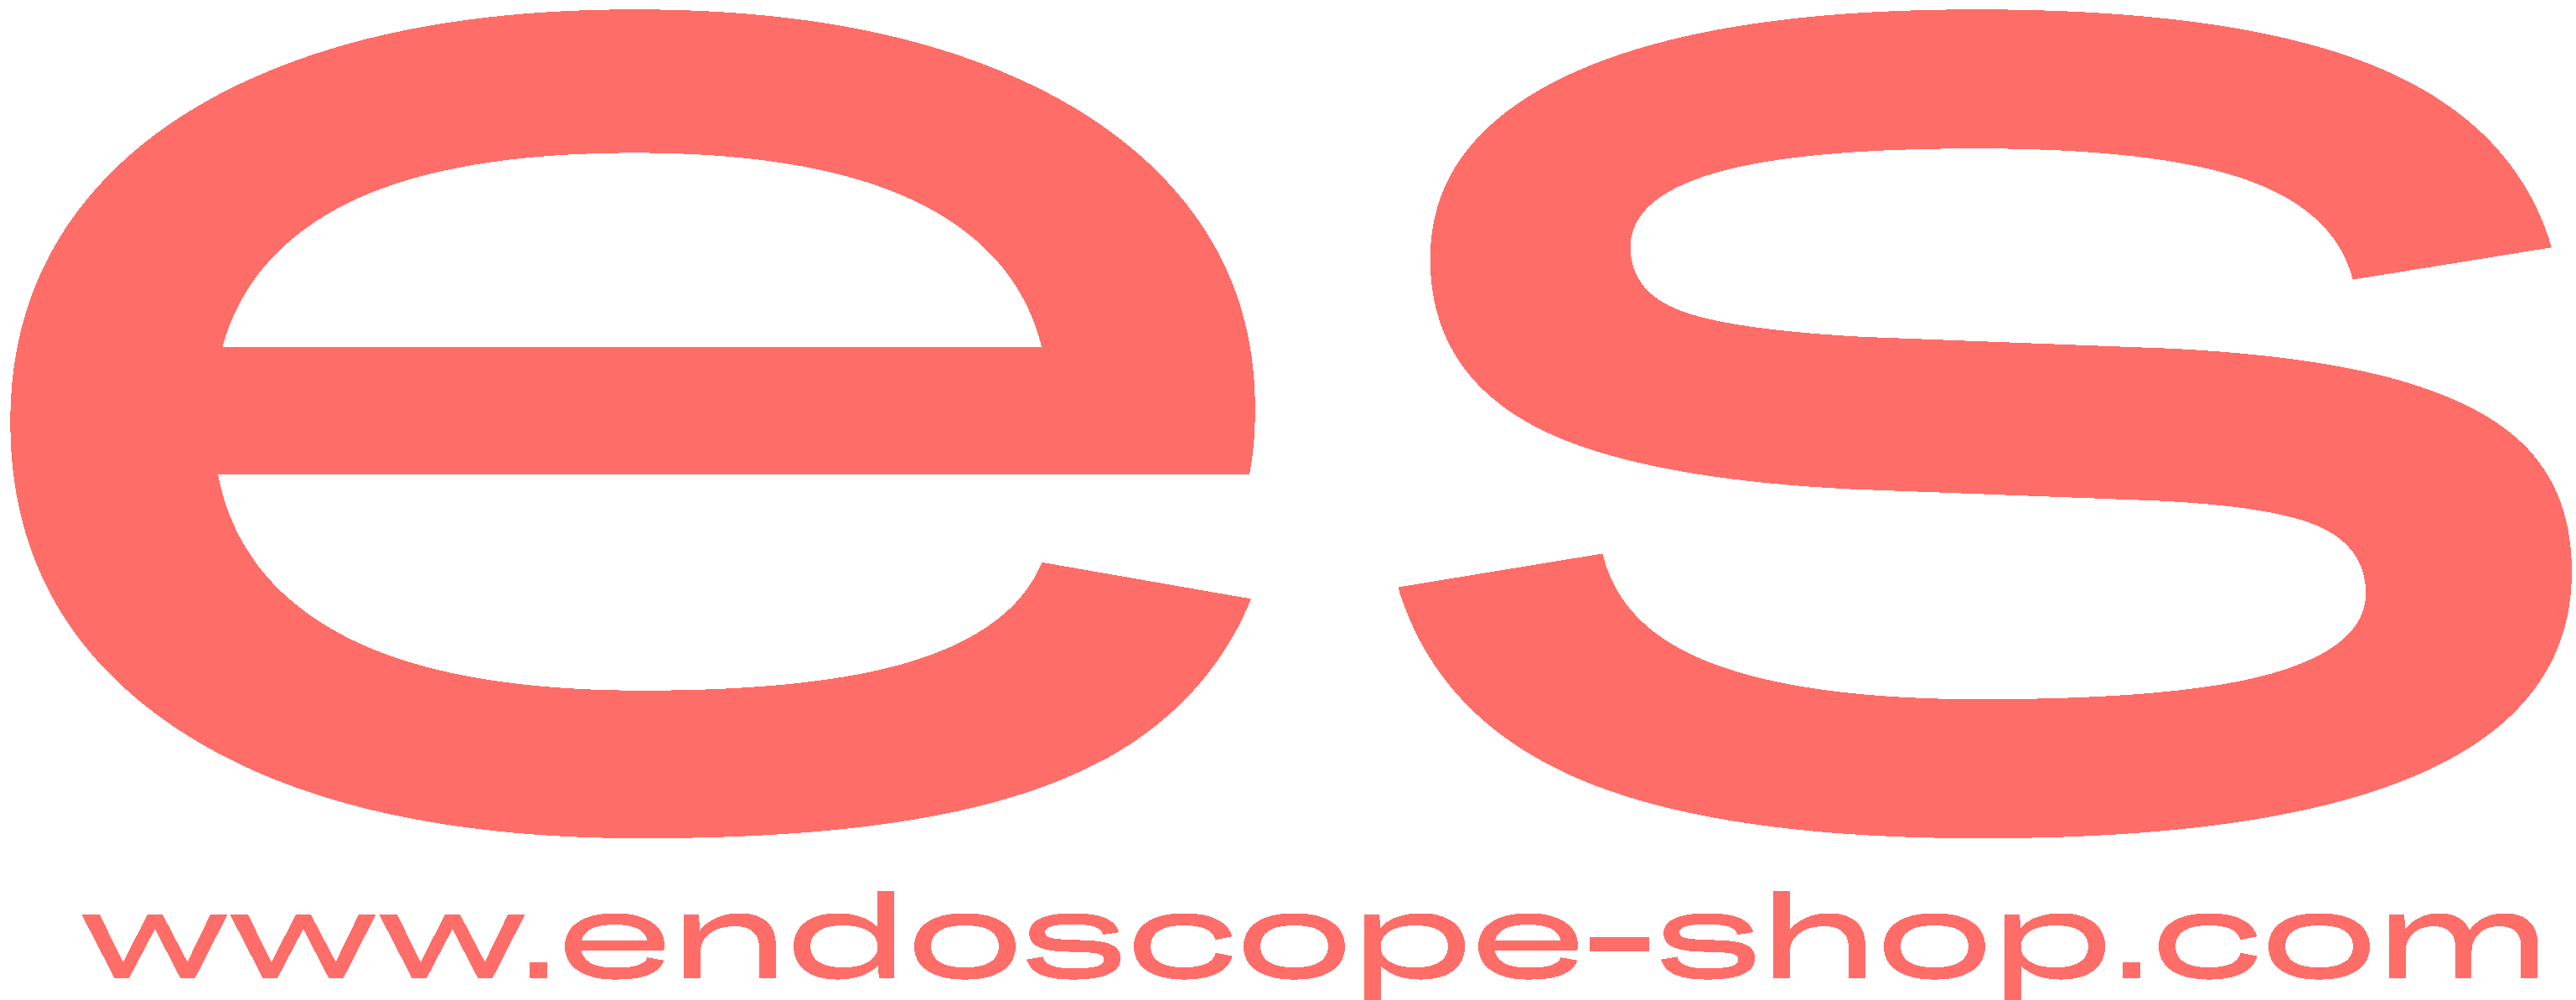 Endoscope shop